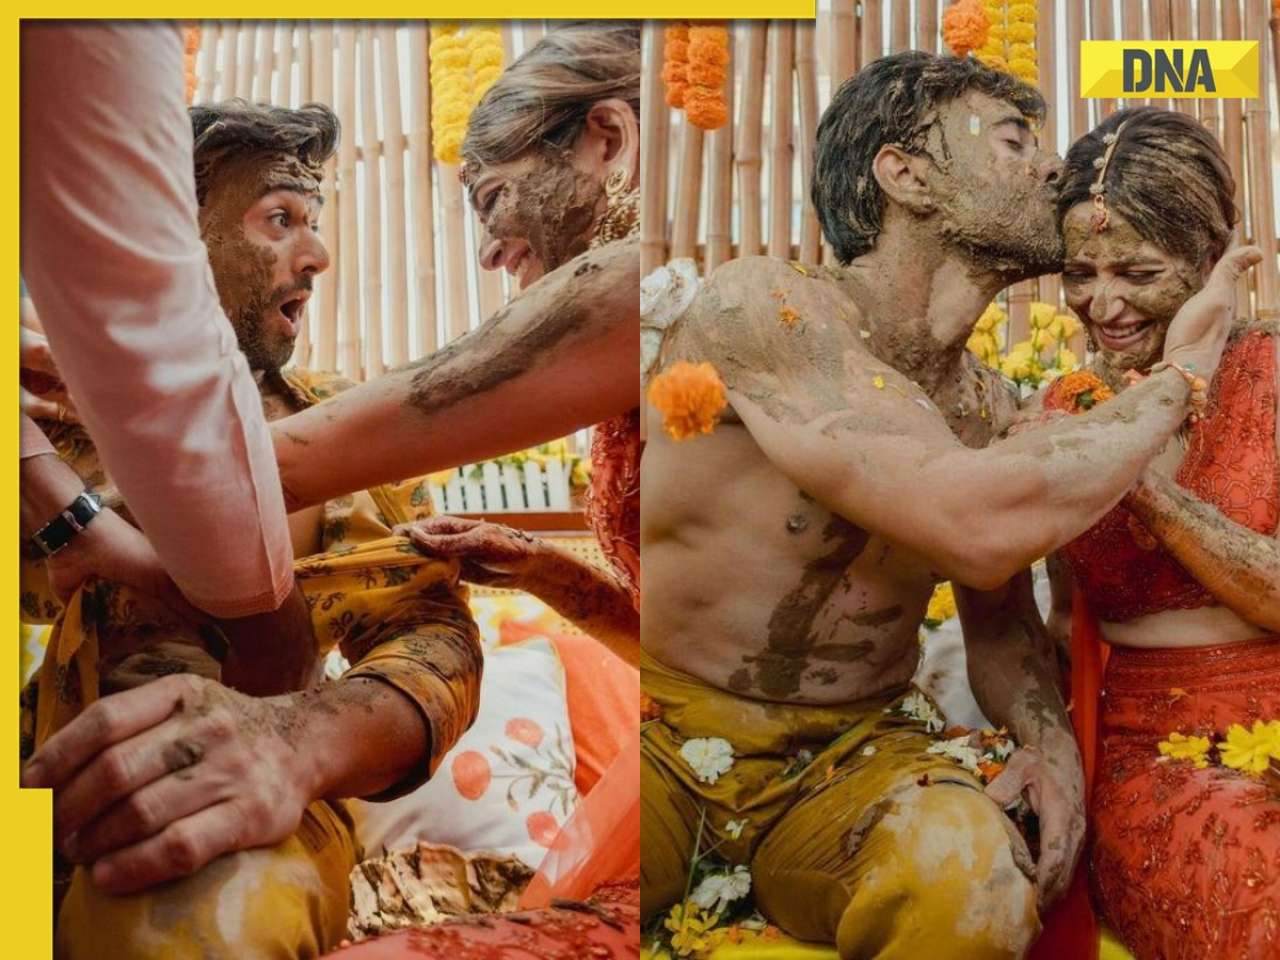 Kriti Kharbanda gets kiss from Pulkit Samrat, tears his clothes in fun pics from their ‘unconventional’ haldi ceremony